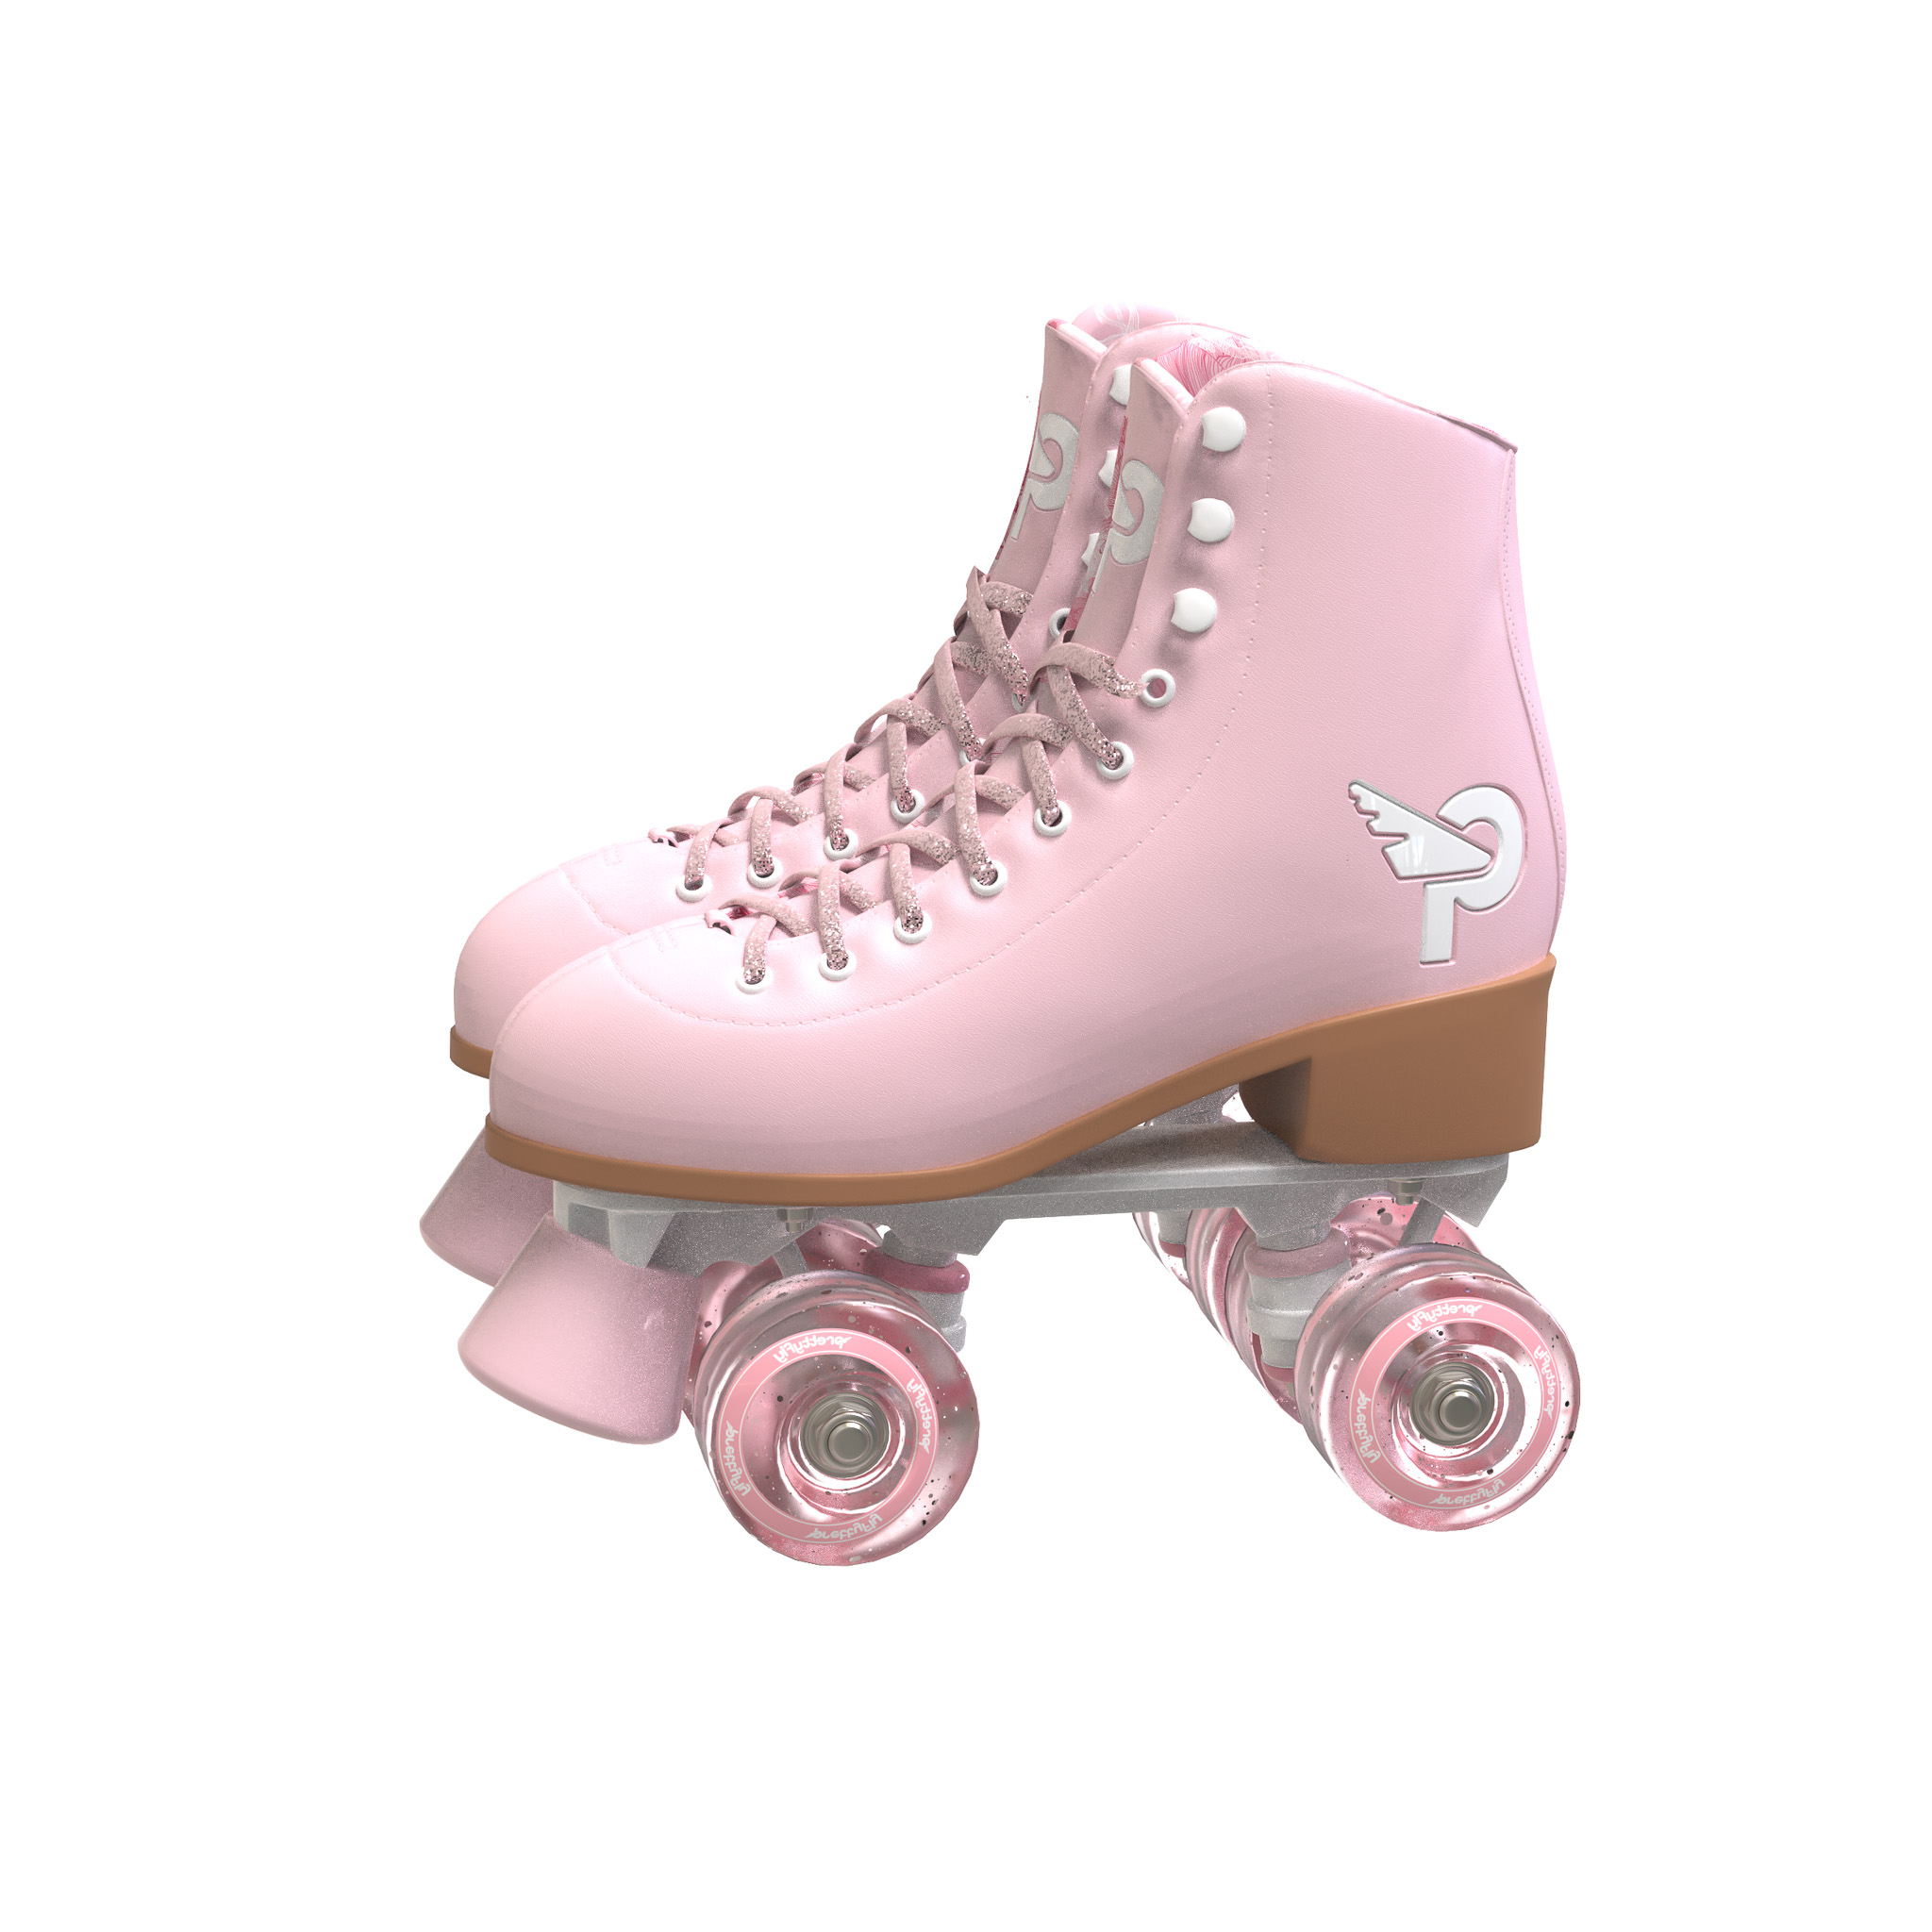 Super Cute Chicago Ladies Classic Quad Roller Skates Pink Stops Pom Poms  Size 7